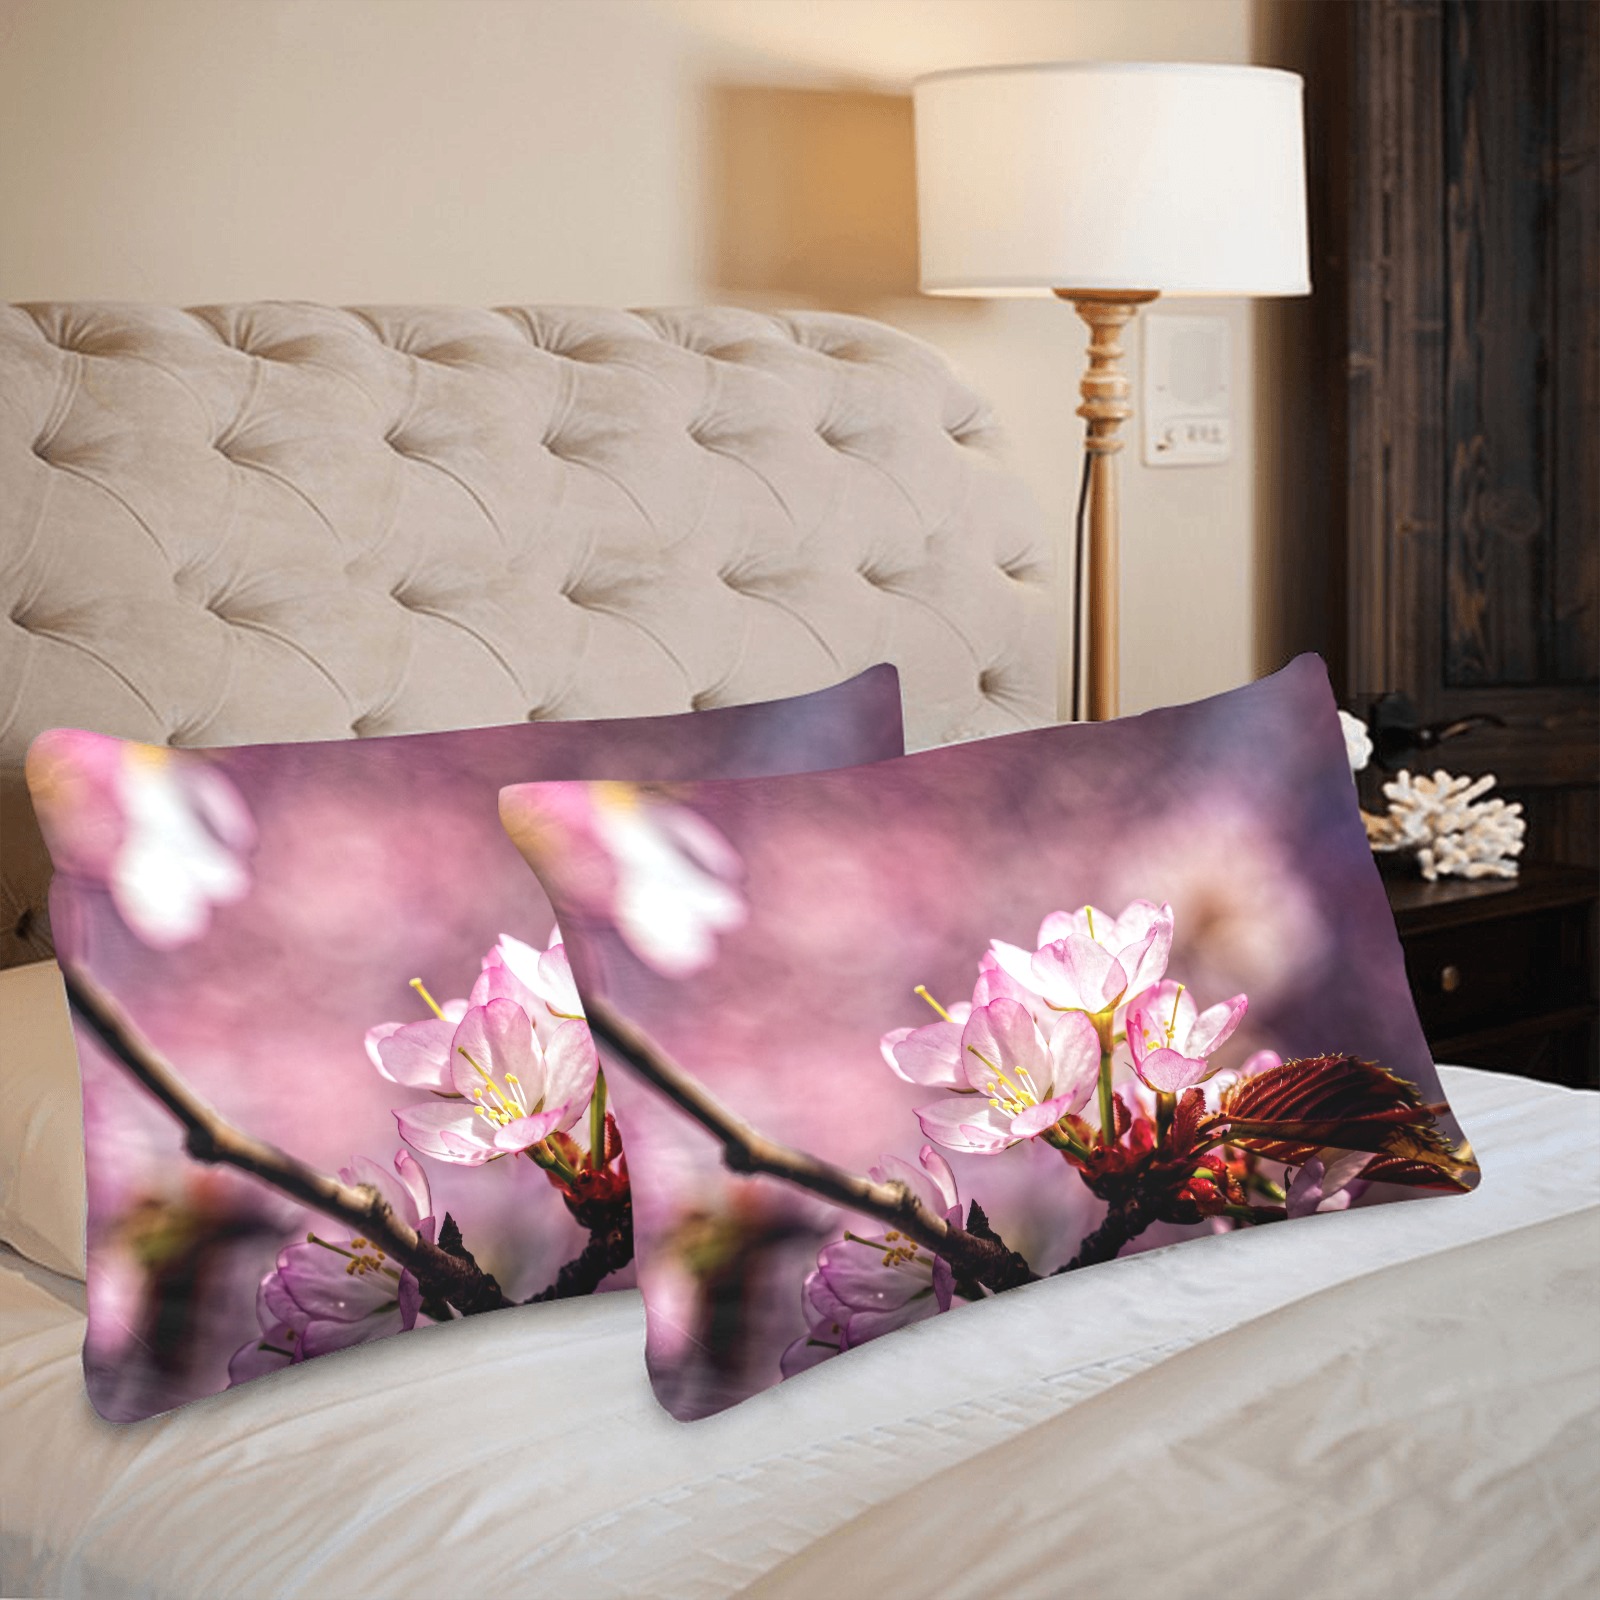 Charming pink sakura flowers. Light and shadows. Custom Pillow Case 20"x 30" (One Side) (Set of 2)